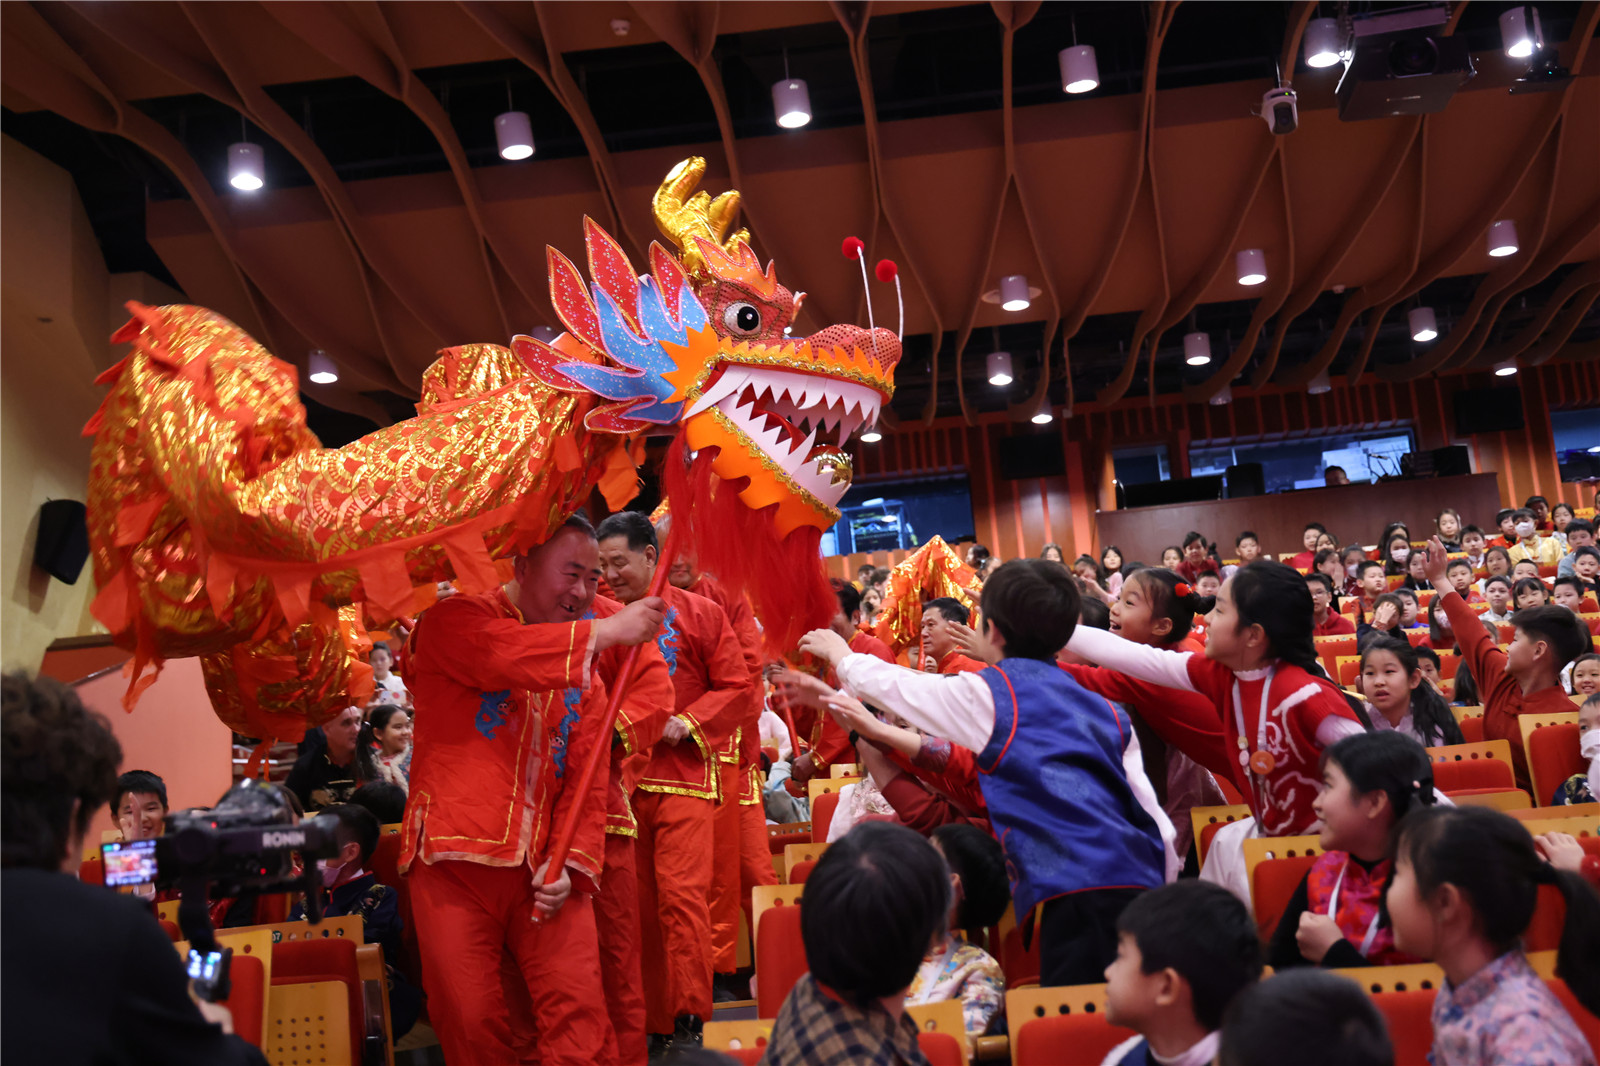 Chinese New Year celebrations - Dragon dance